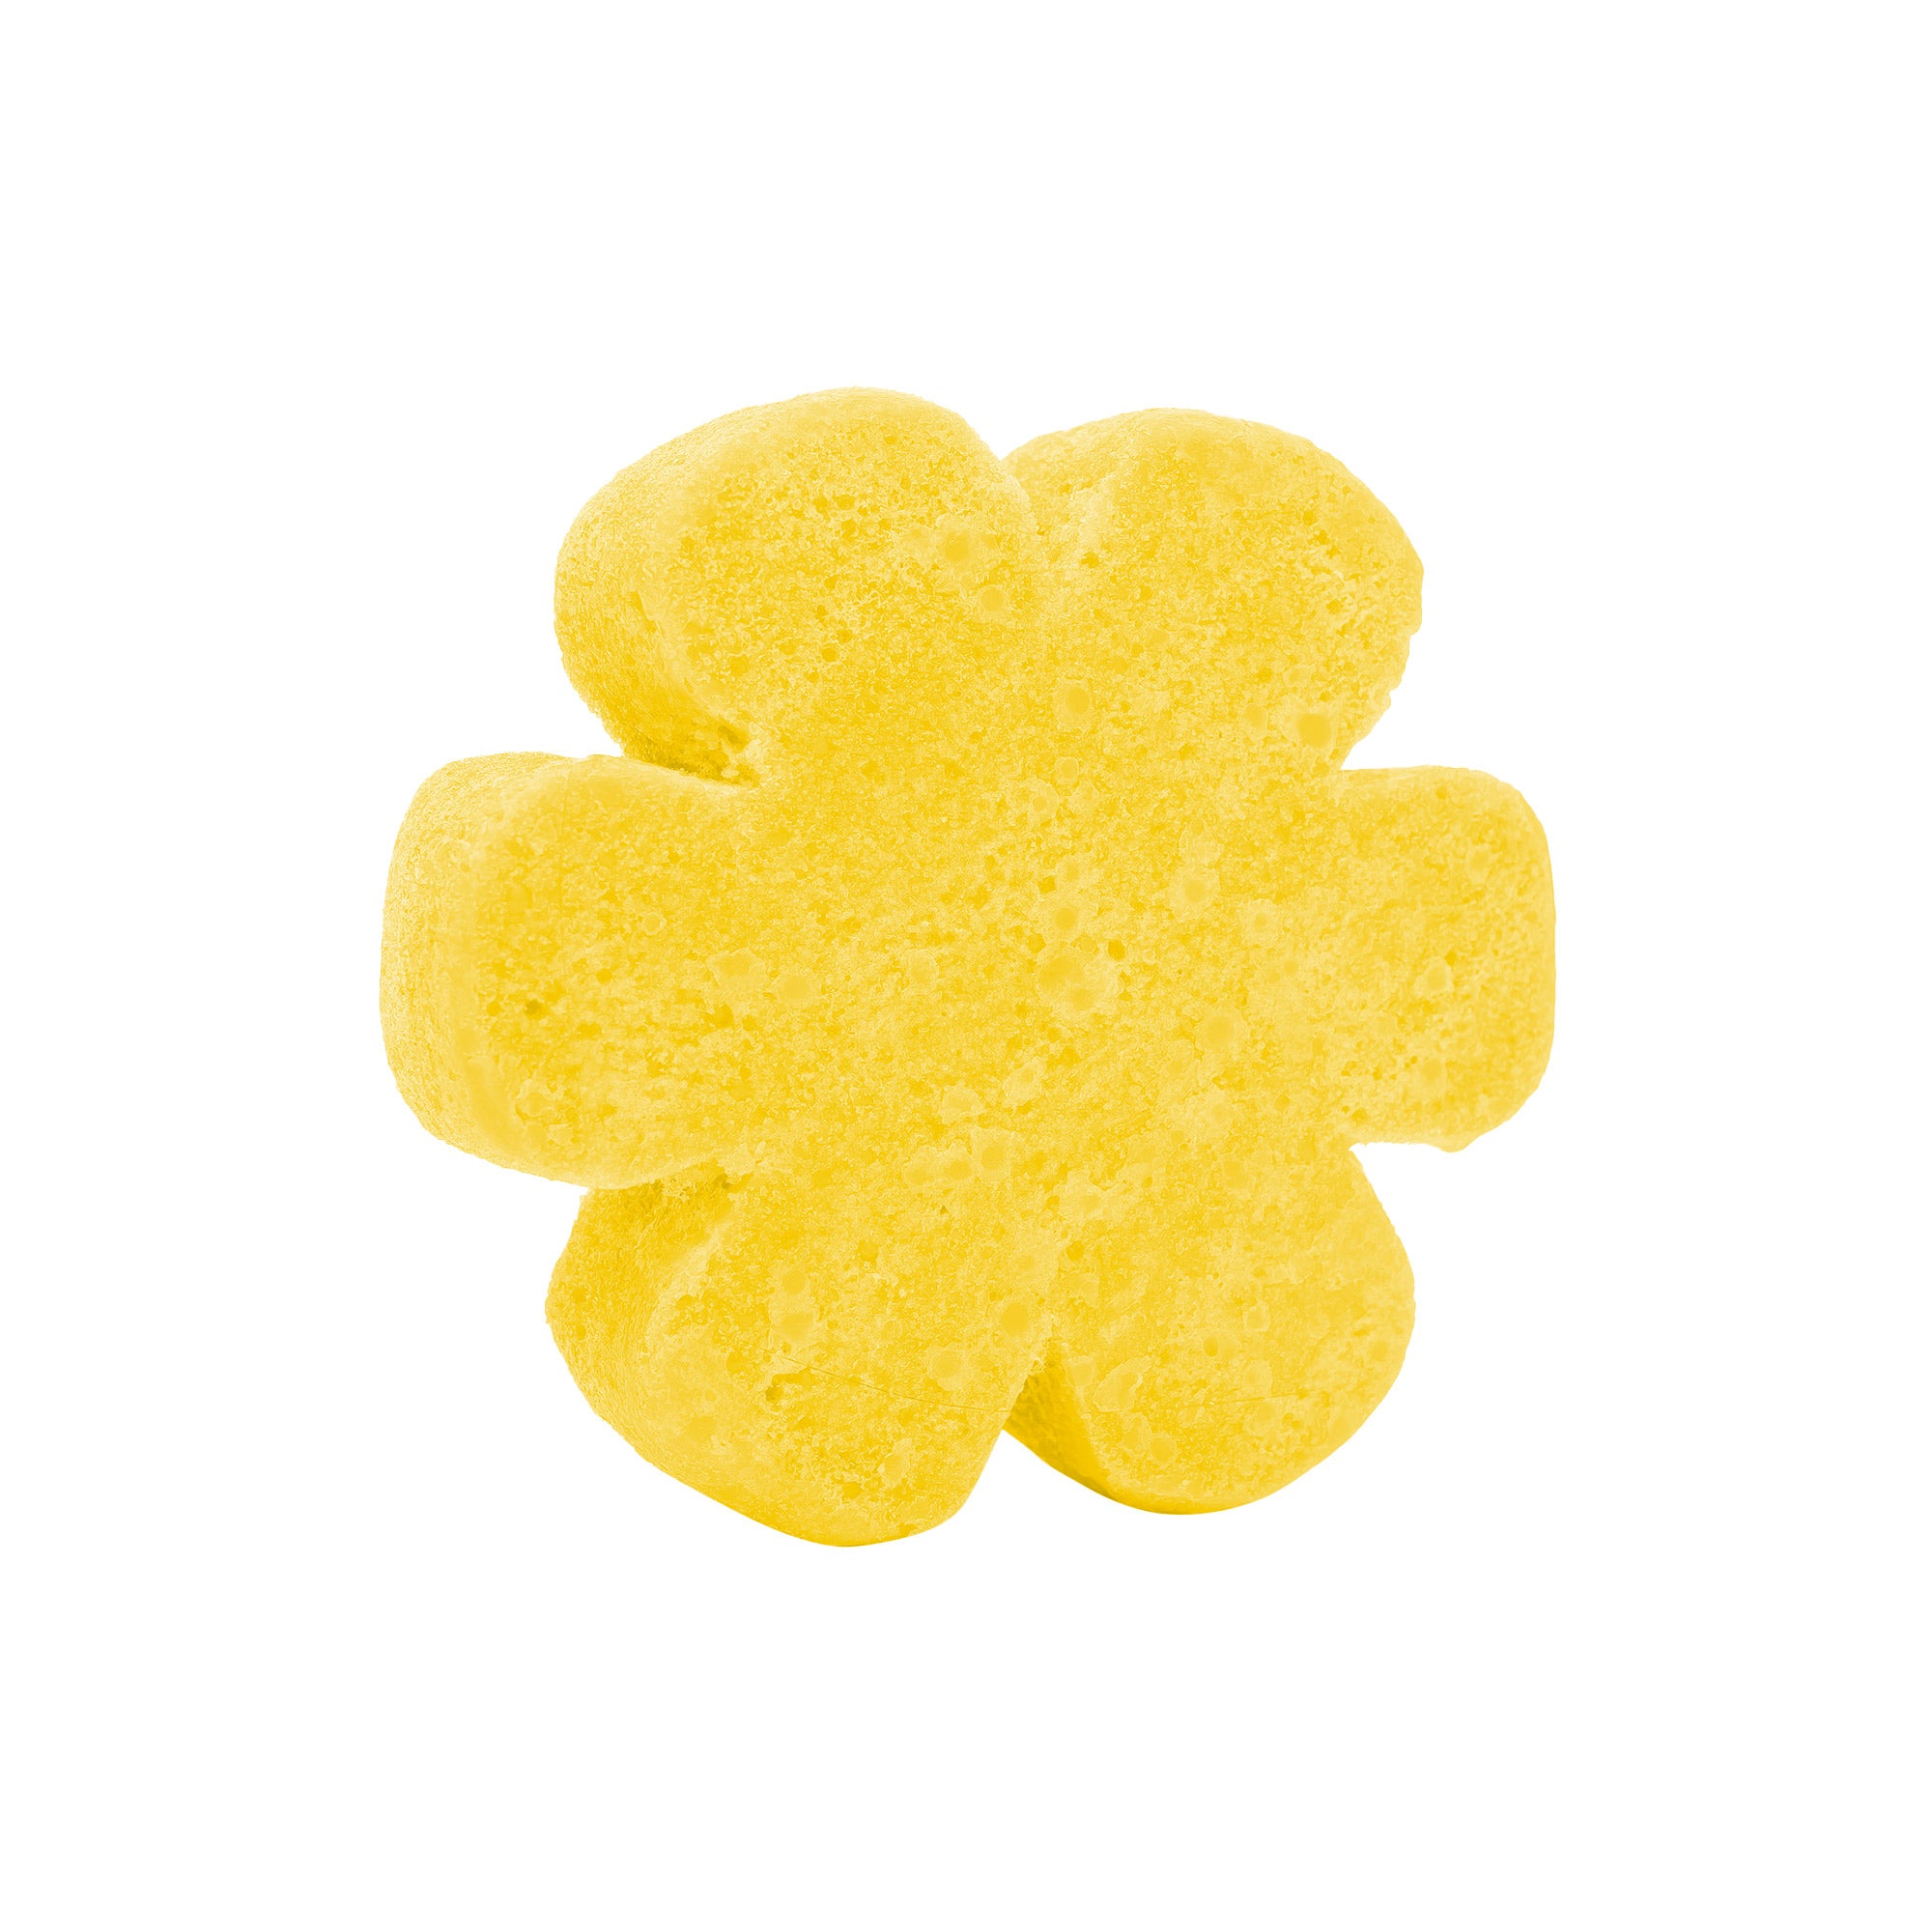 Soap Spongie-Fun and Fruity